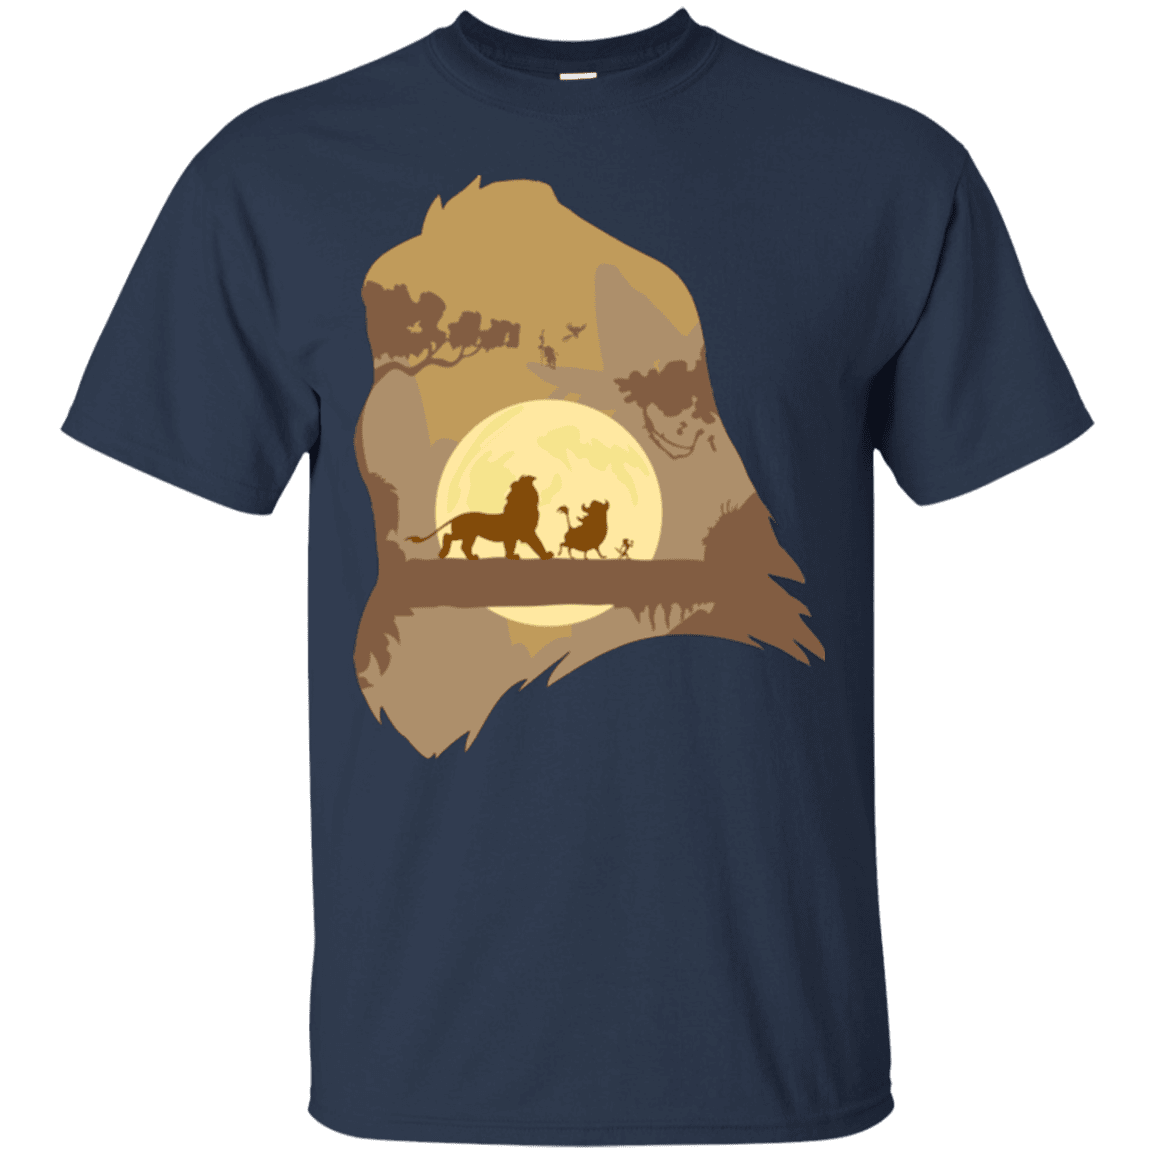 T-Shirts Navy / Small Lion Portrait T-Shirt